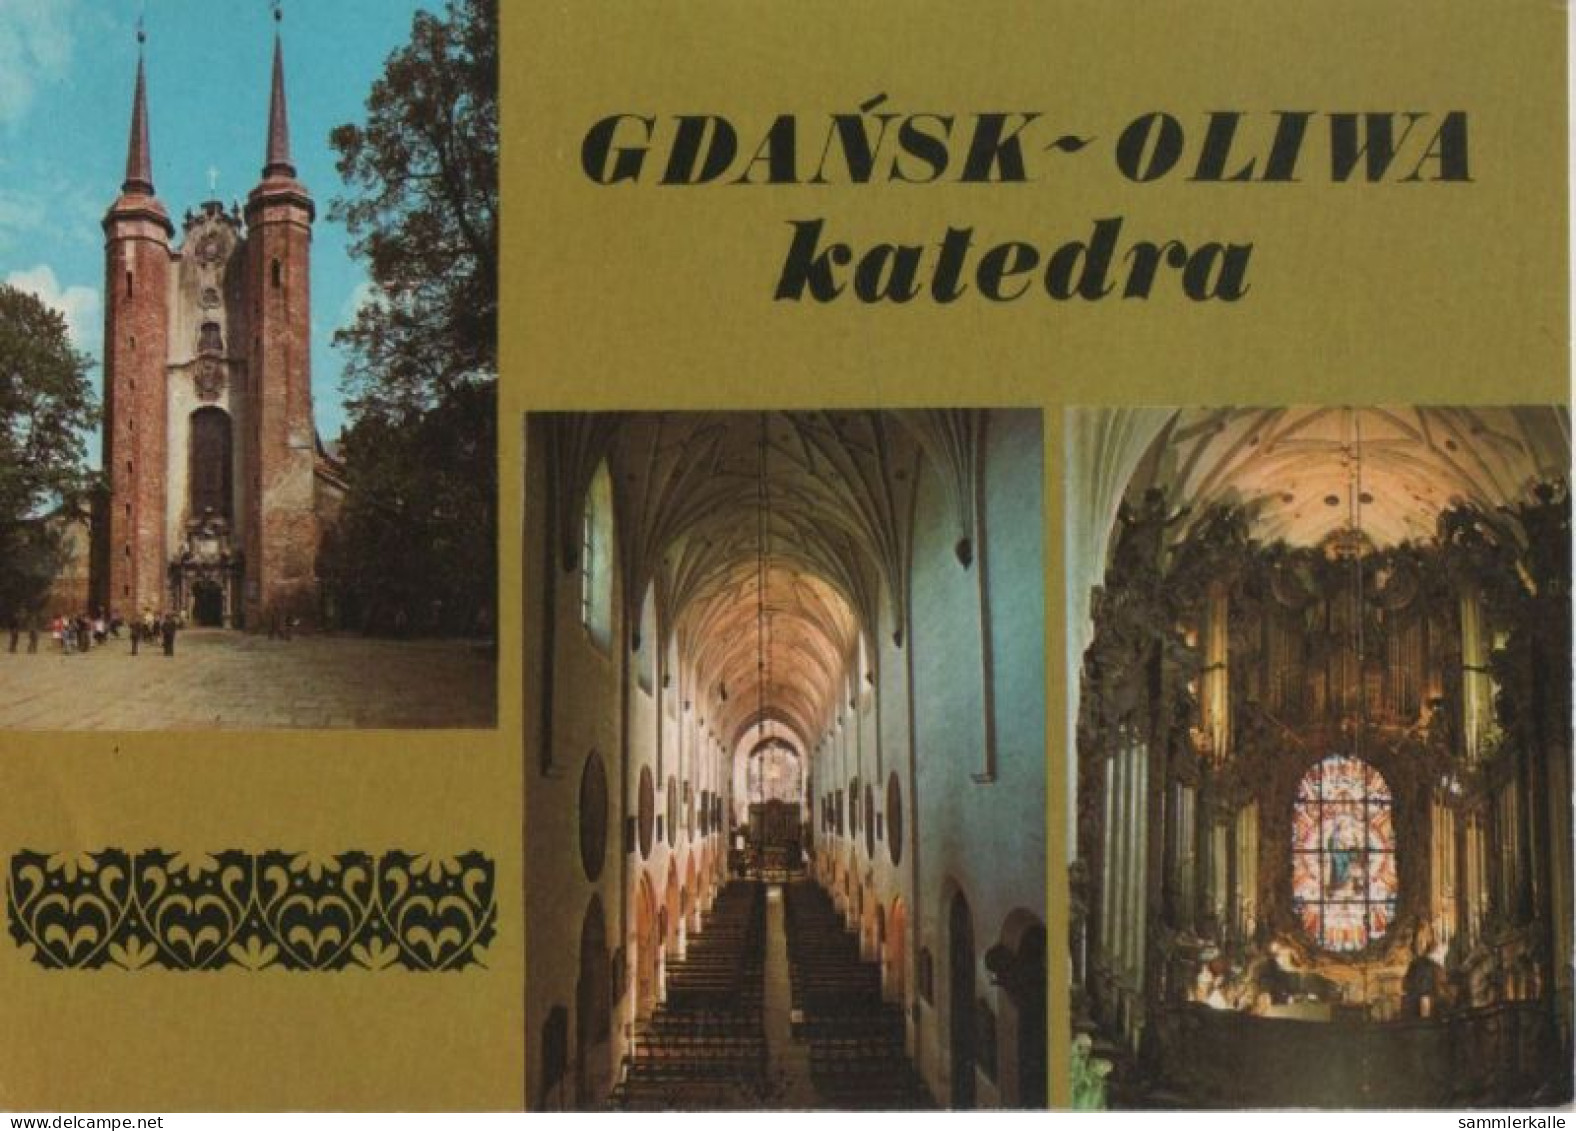 74249 - Polen - Gdansk - Danzig - Oliwa Ketedra - 1977 - Poland